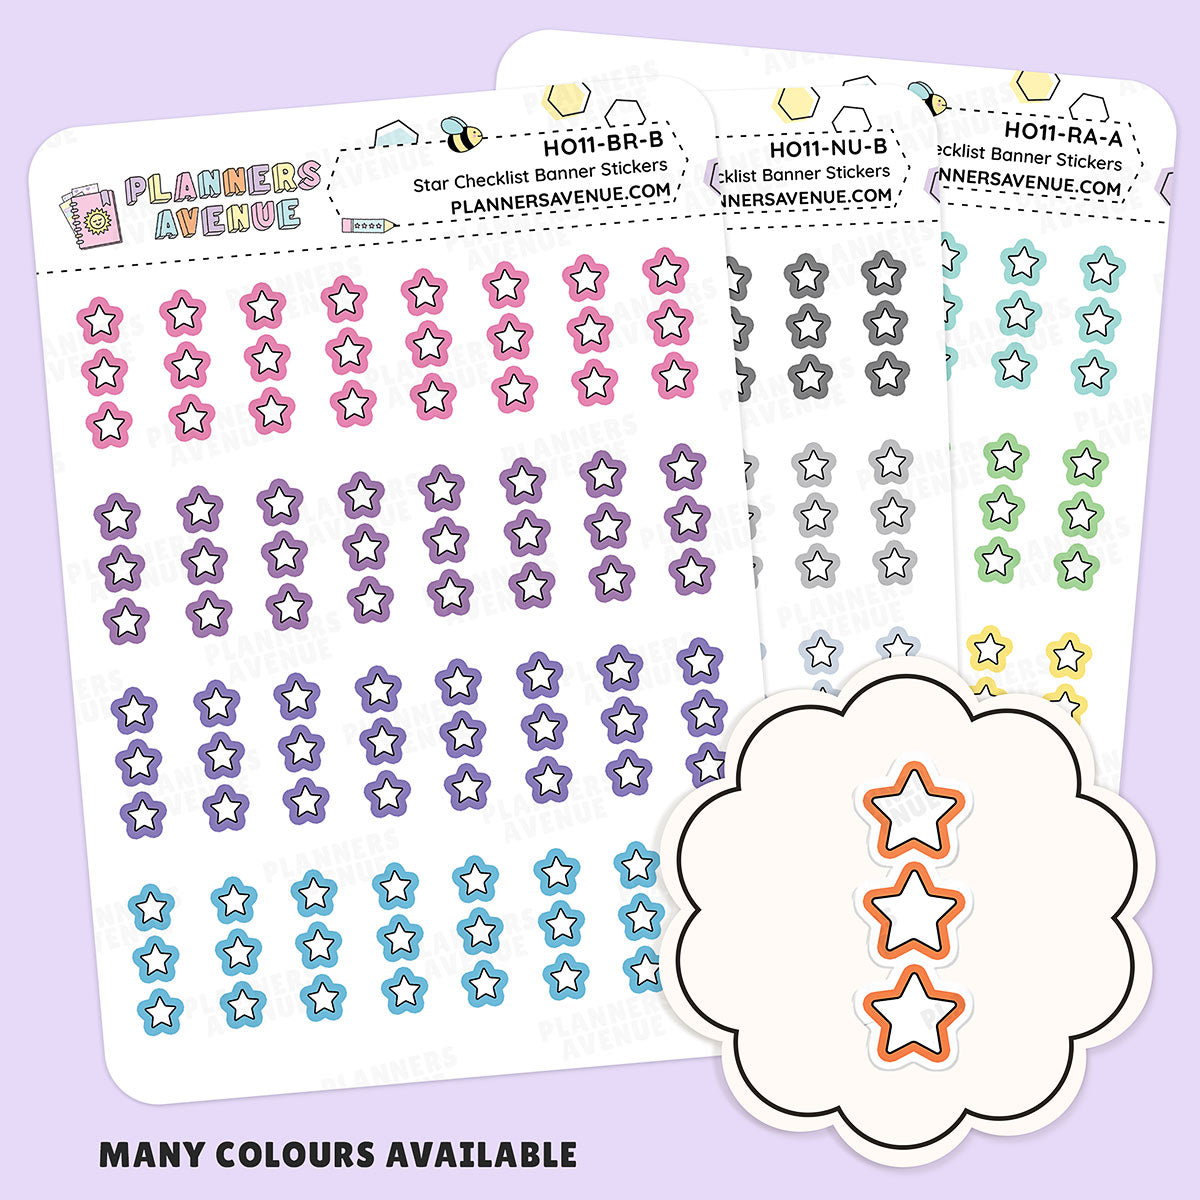 Star Doodle Checklist Stickers